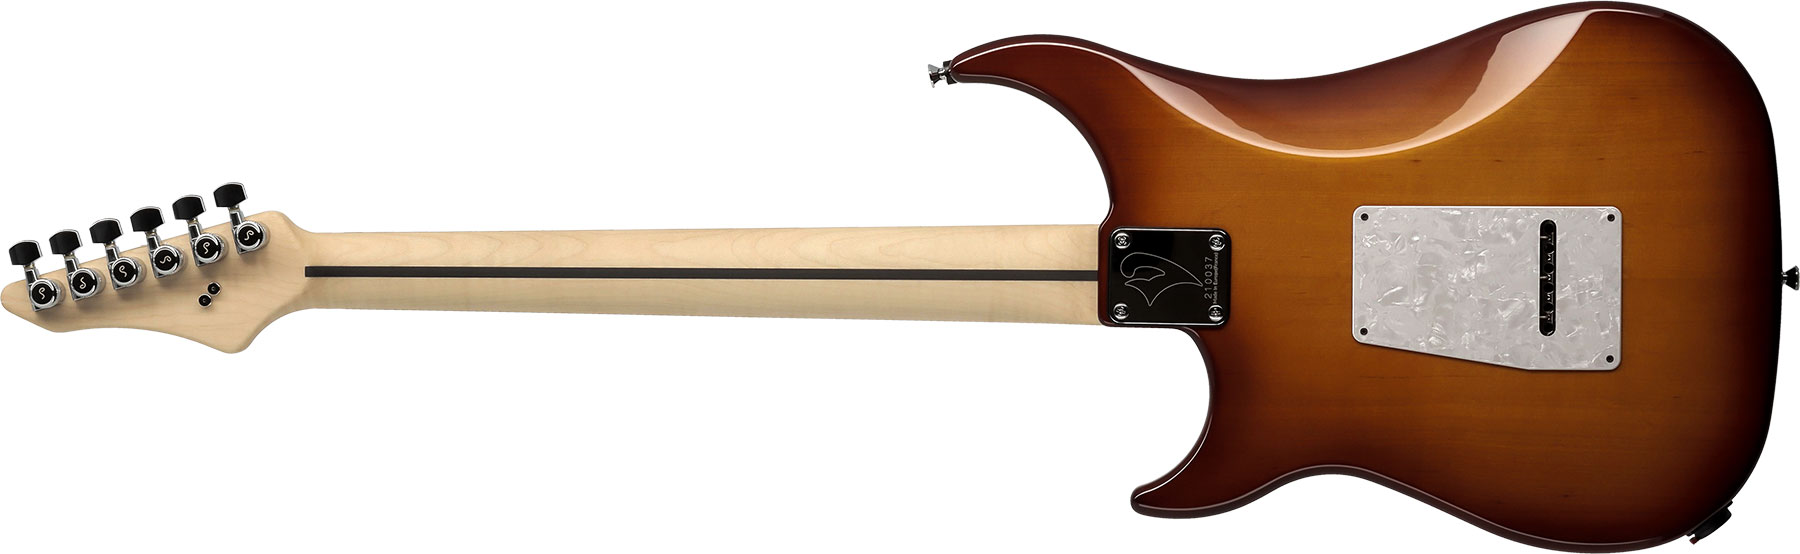 Vigier Excalibur Supraa Hsh Trem Rw - Antique Violin - Str shape electric guitar - Variation 1